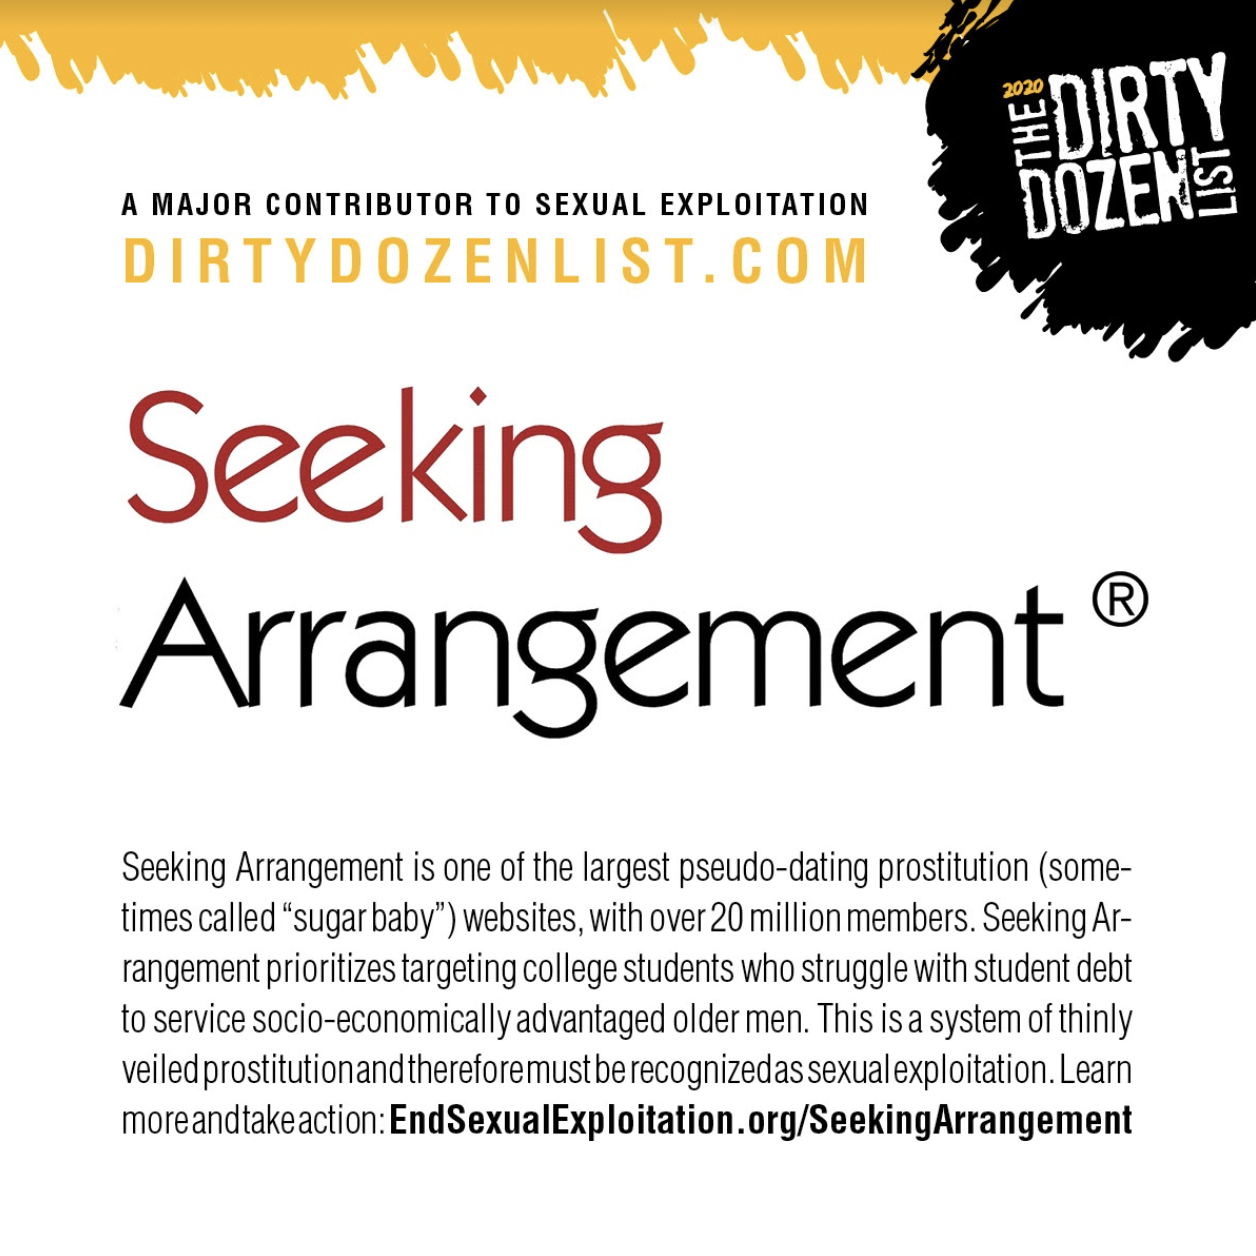 Dirty Dozen graphic for Seeking Arrangement (National Center on Sexual Exploitation)